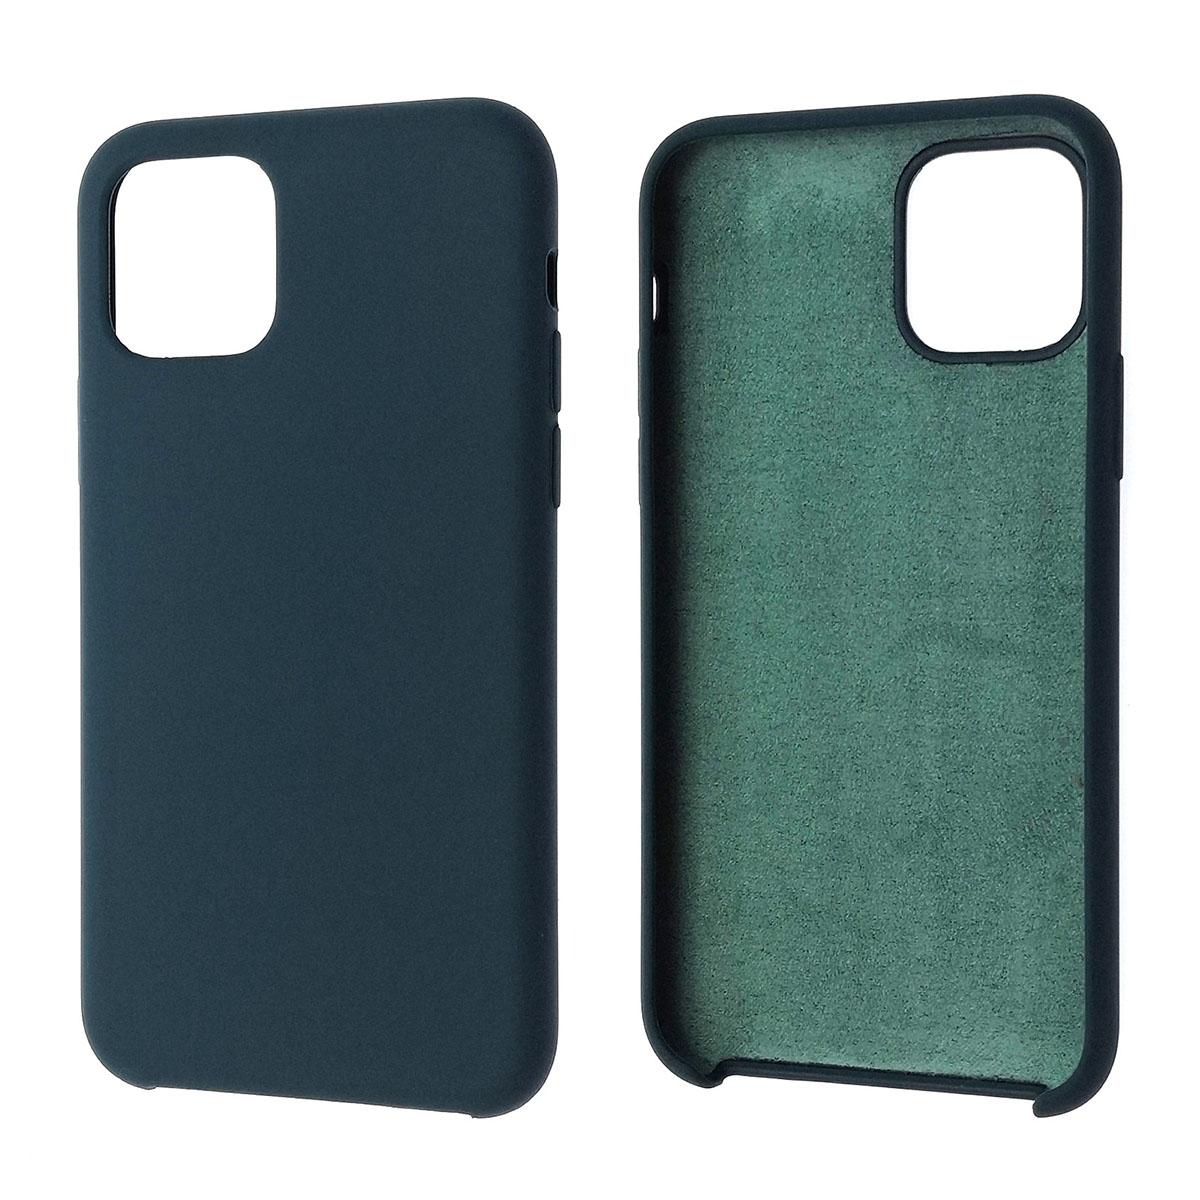 Чехол накладка Silicon Case для APPLE iPhone 11 Pro 2019, силикон, бархат, цвет синий сапфир.